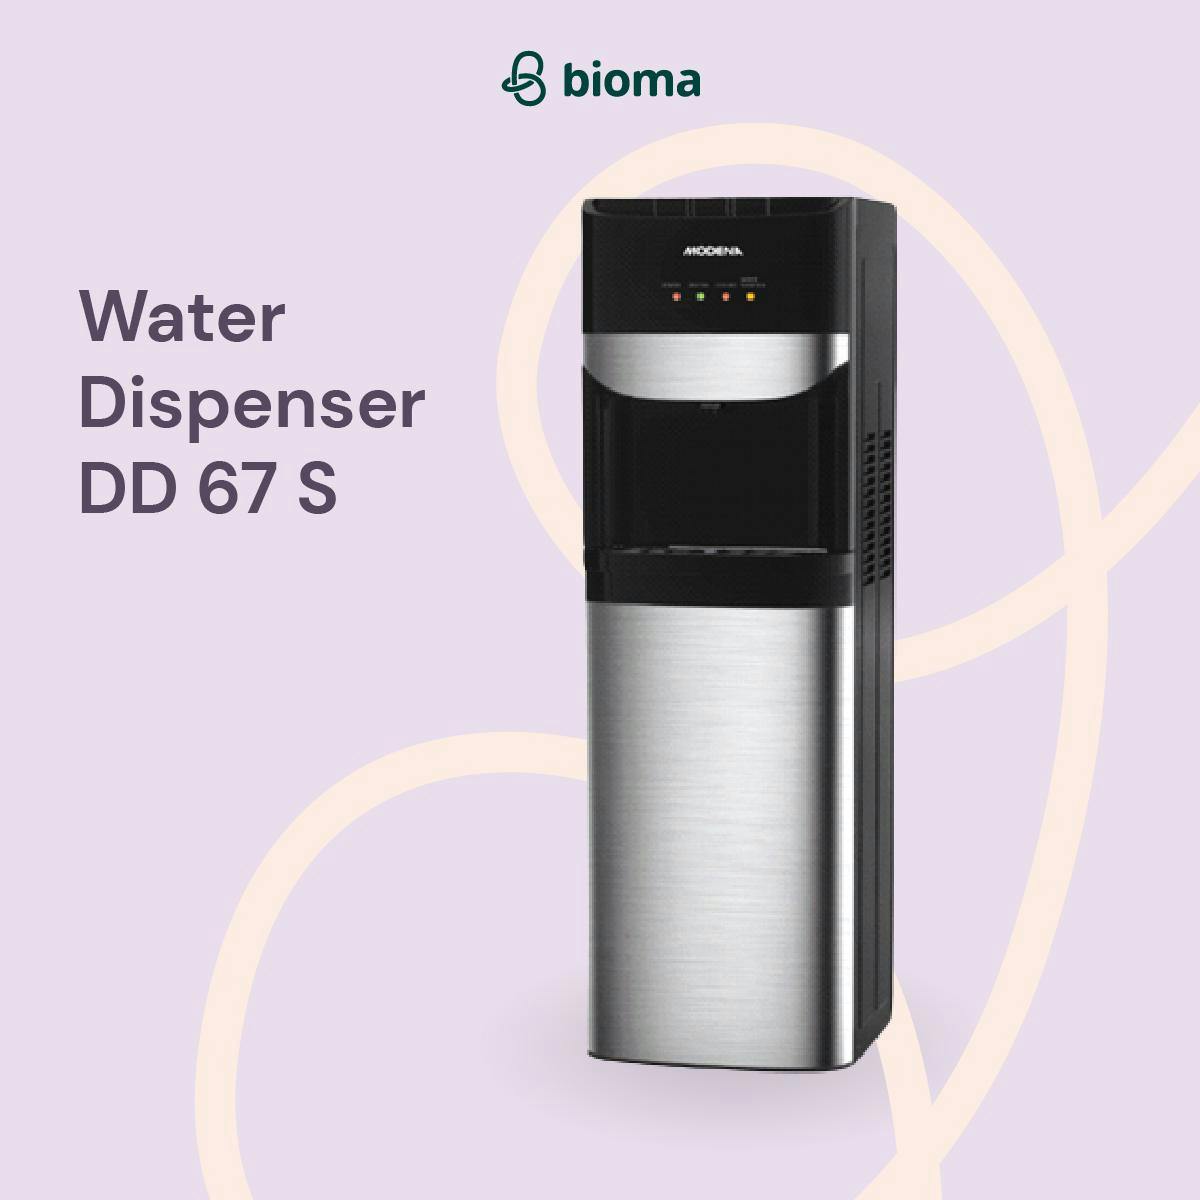 Water Dispenser DD 67 S